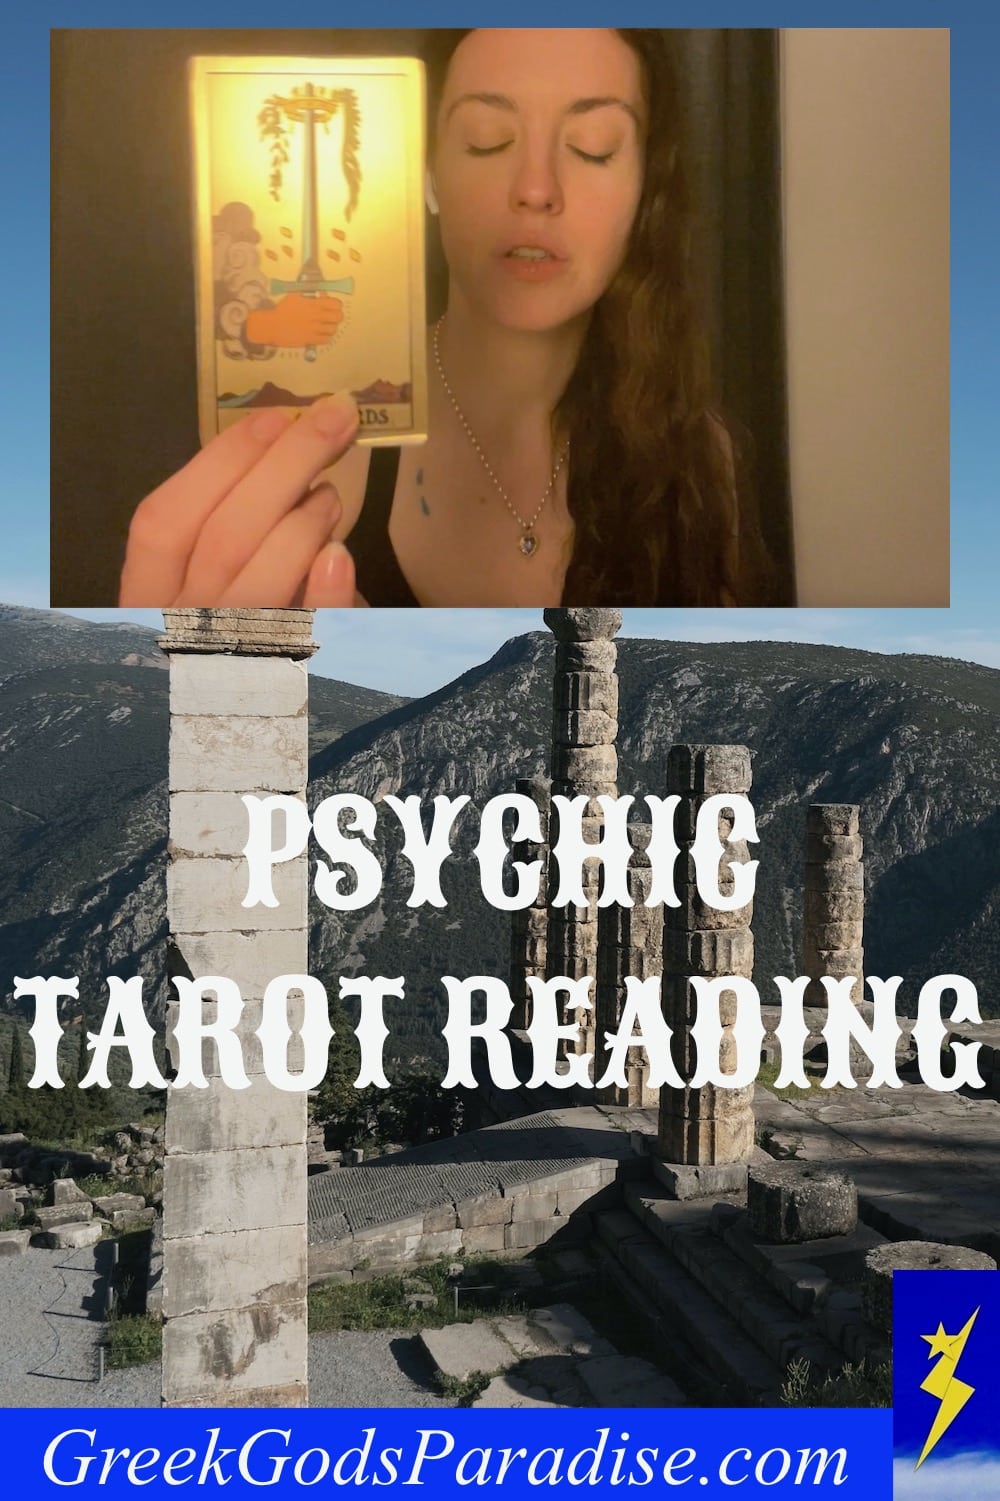 Psychic Tarot Reading inspired by the Greek Gods